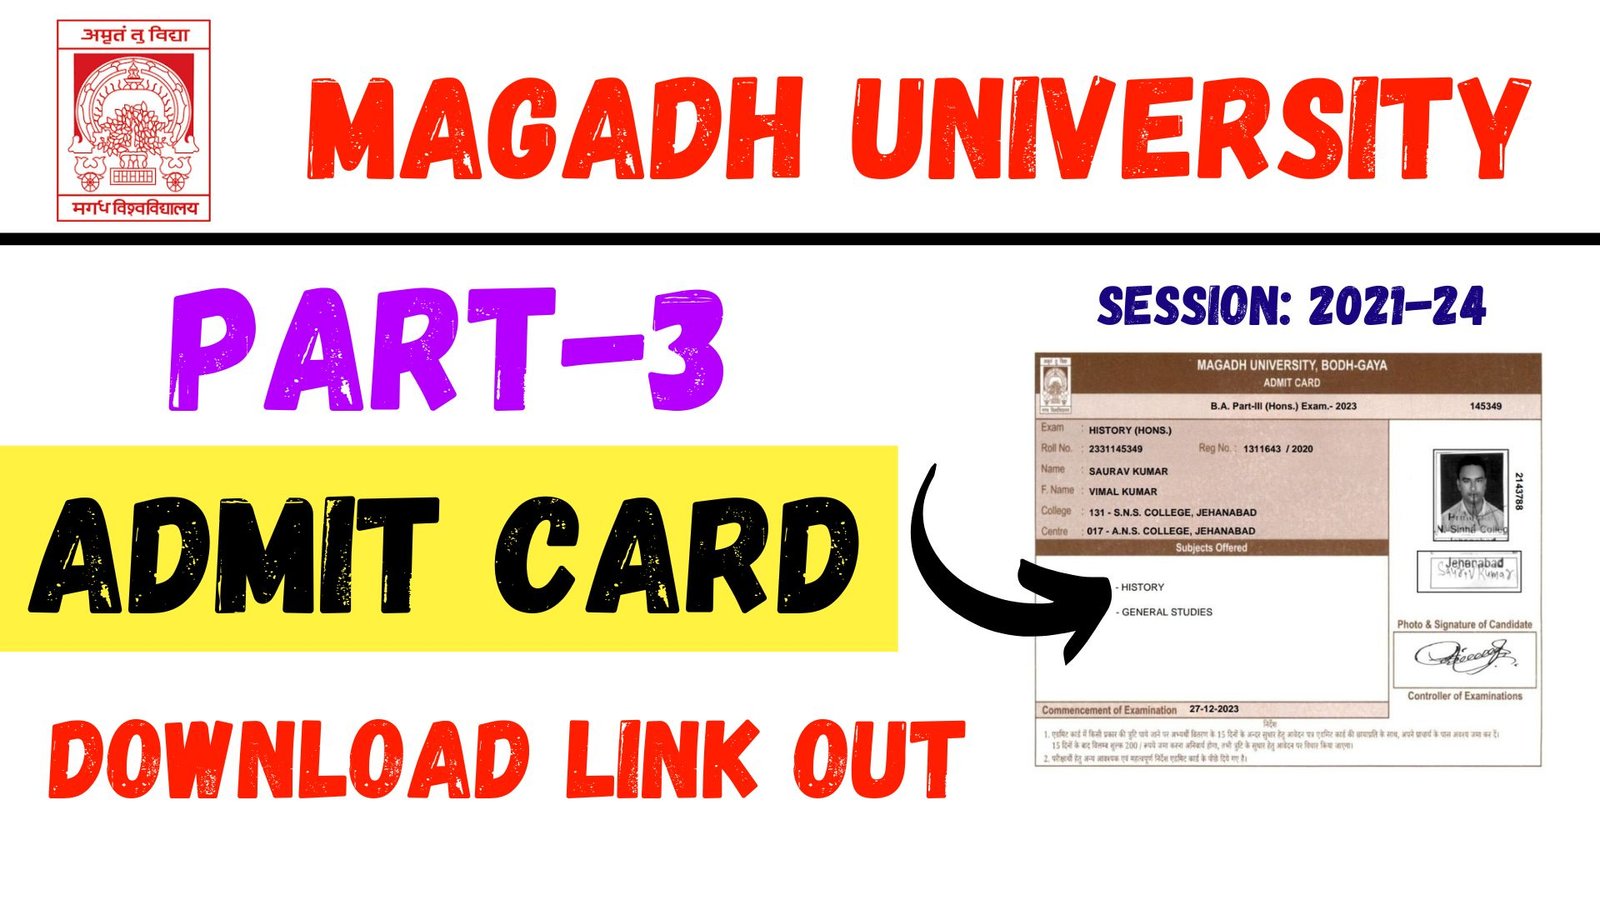 Magadh University Part 3 Admit Card 2021-24 Download Link